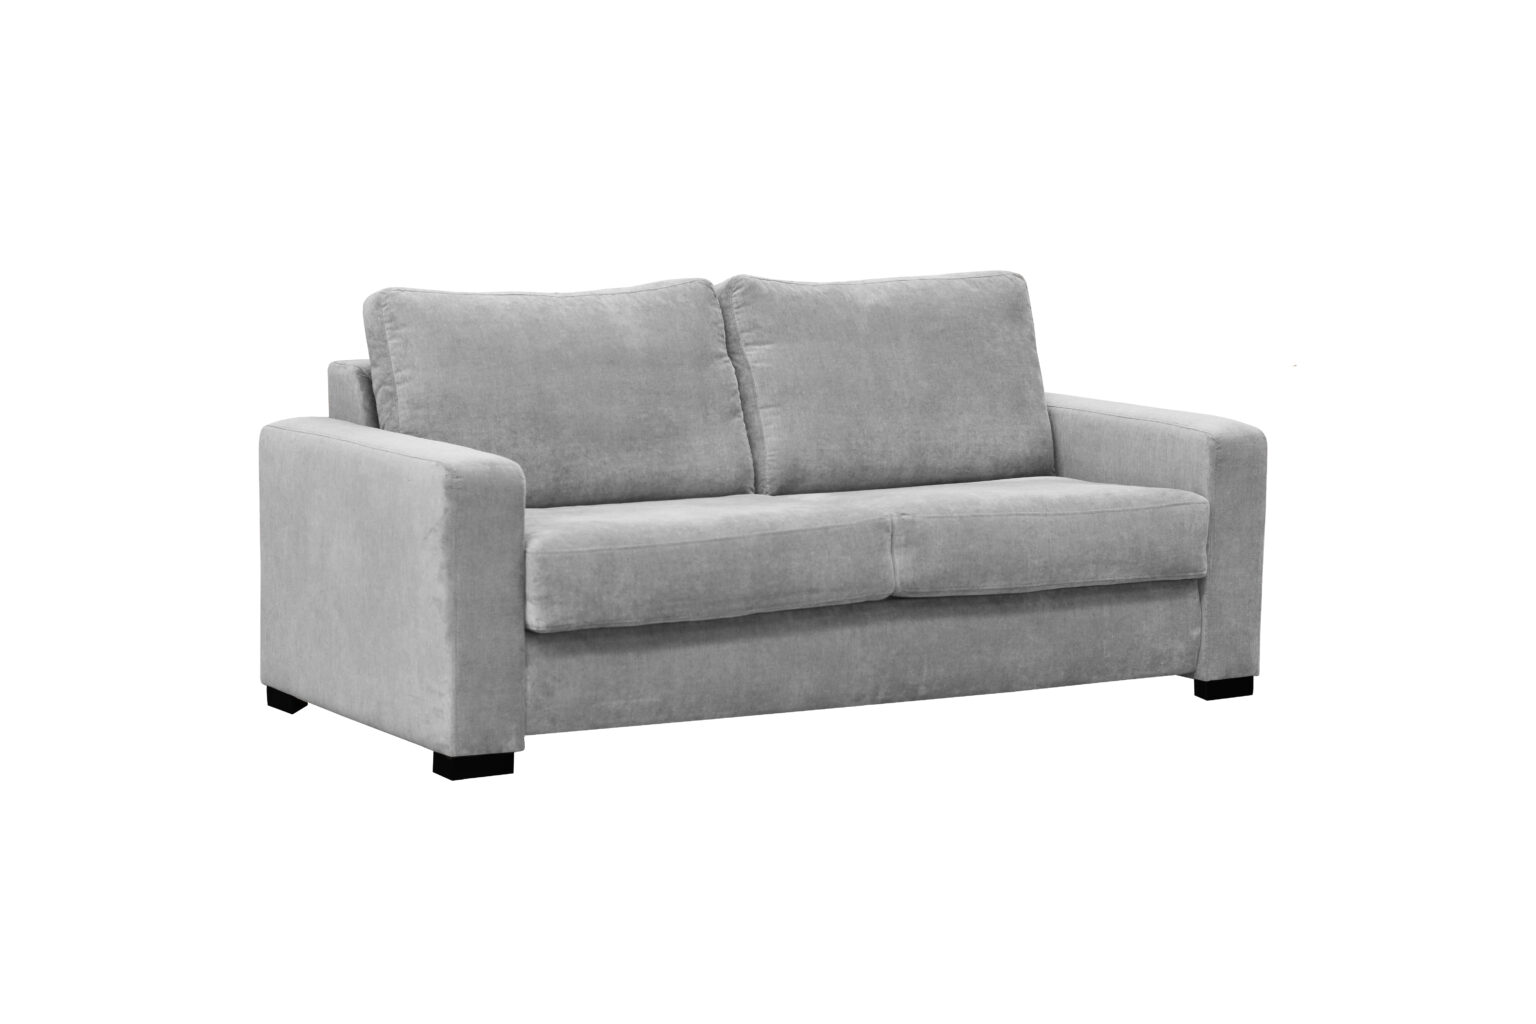 price of sofa bed set